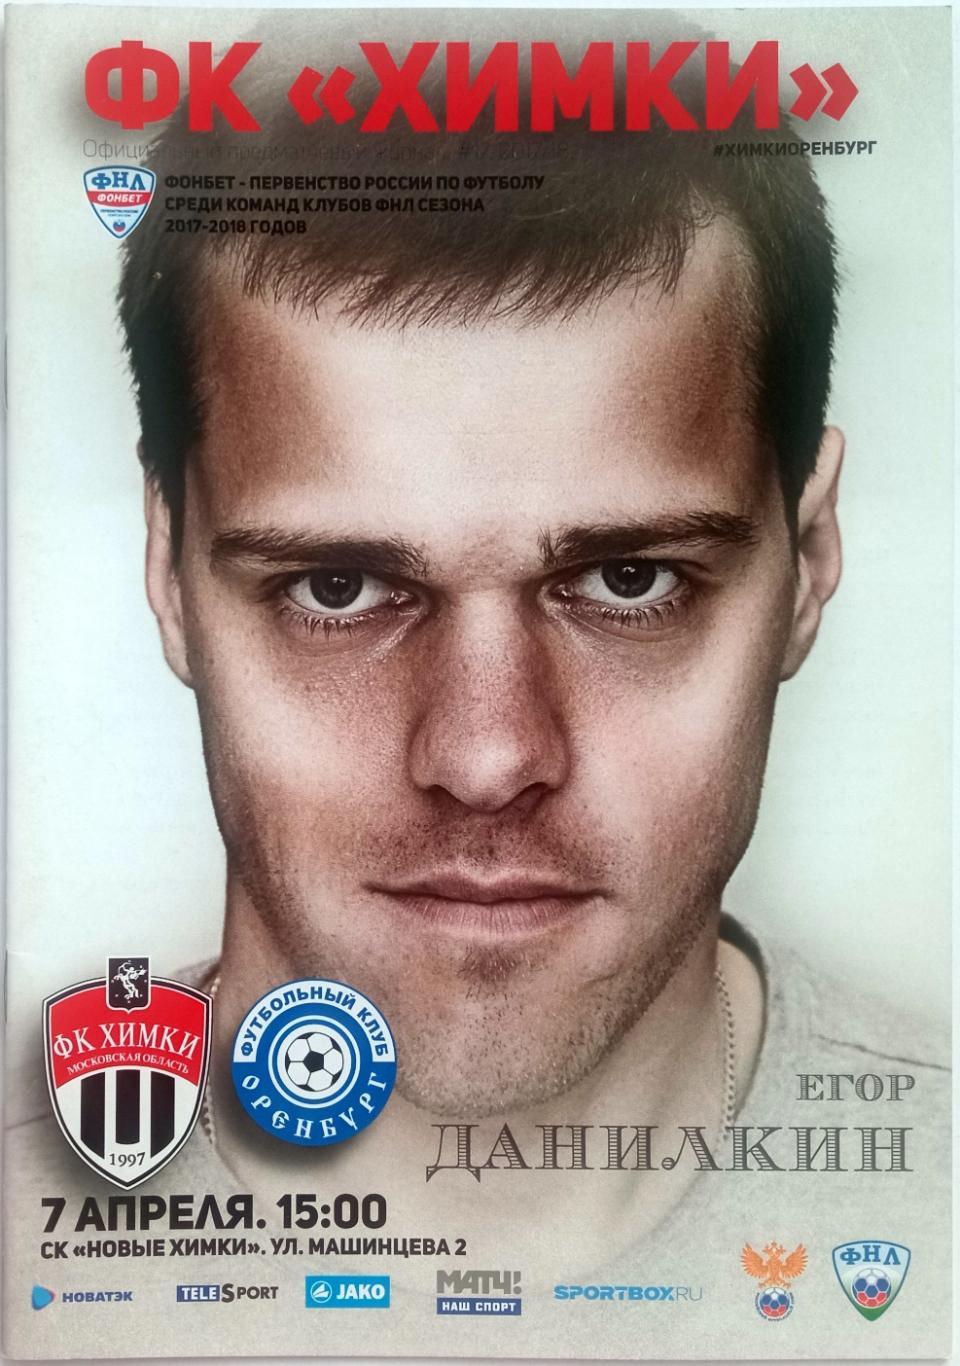 Химки – Оренбург 07.04.2018 Егор Данилкин постер + интервью